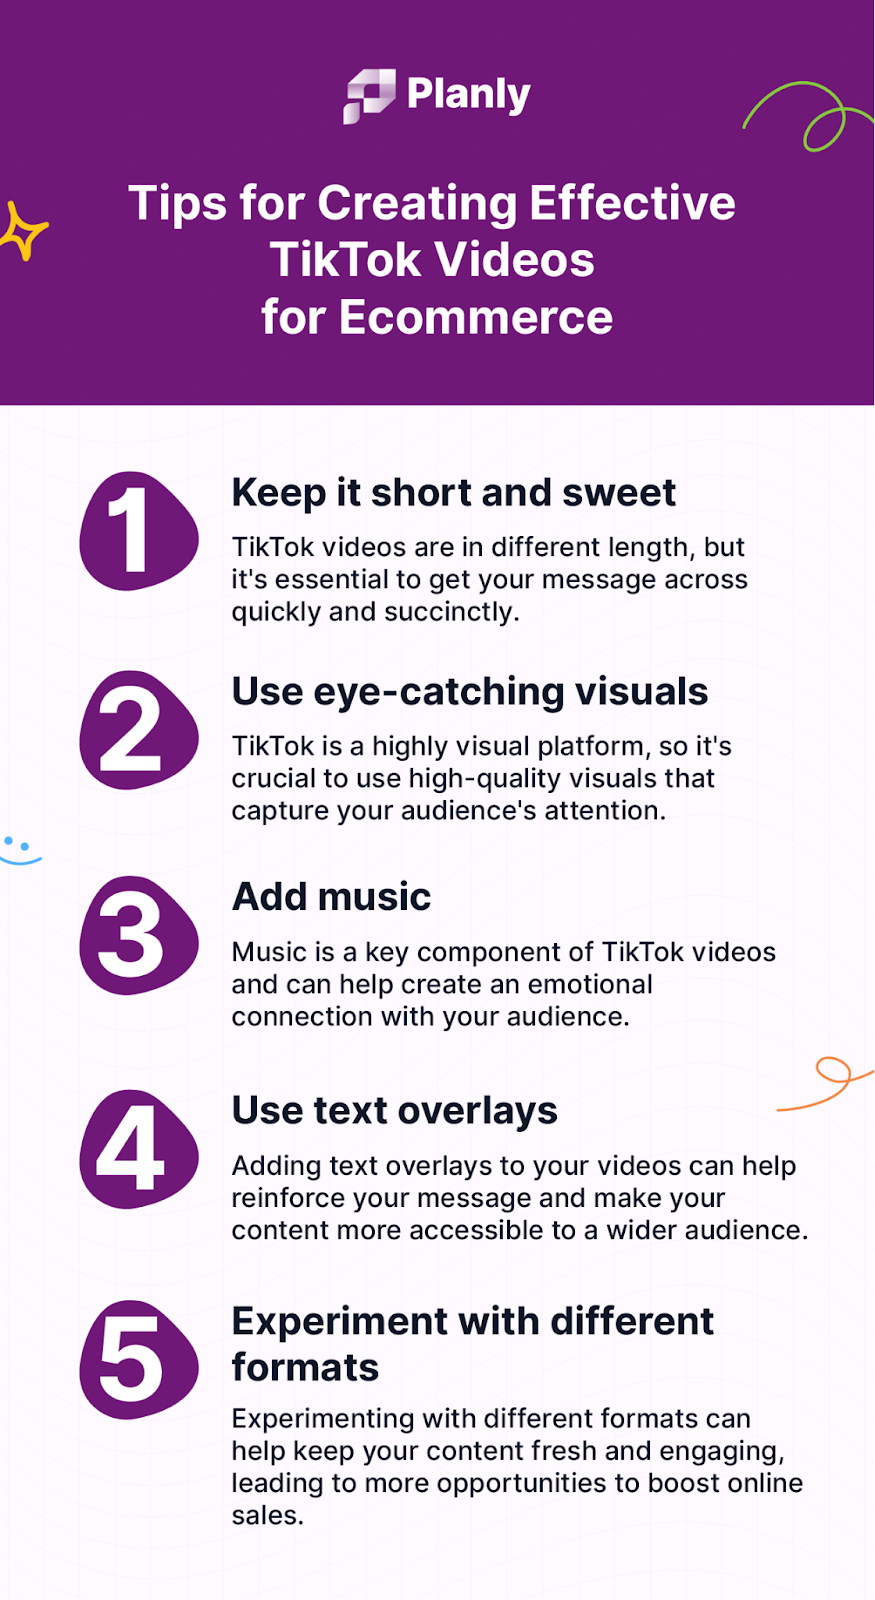 Tips for creating effective TikTok videos for eCommerce